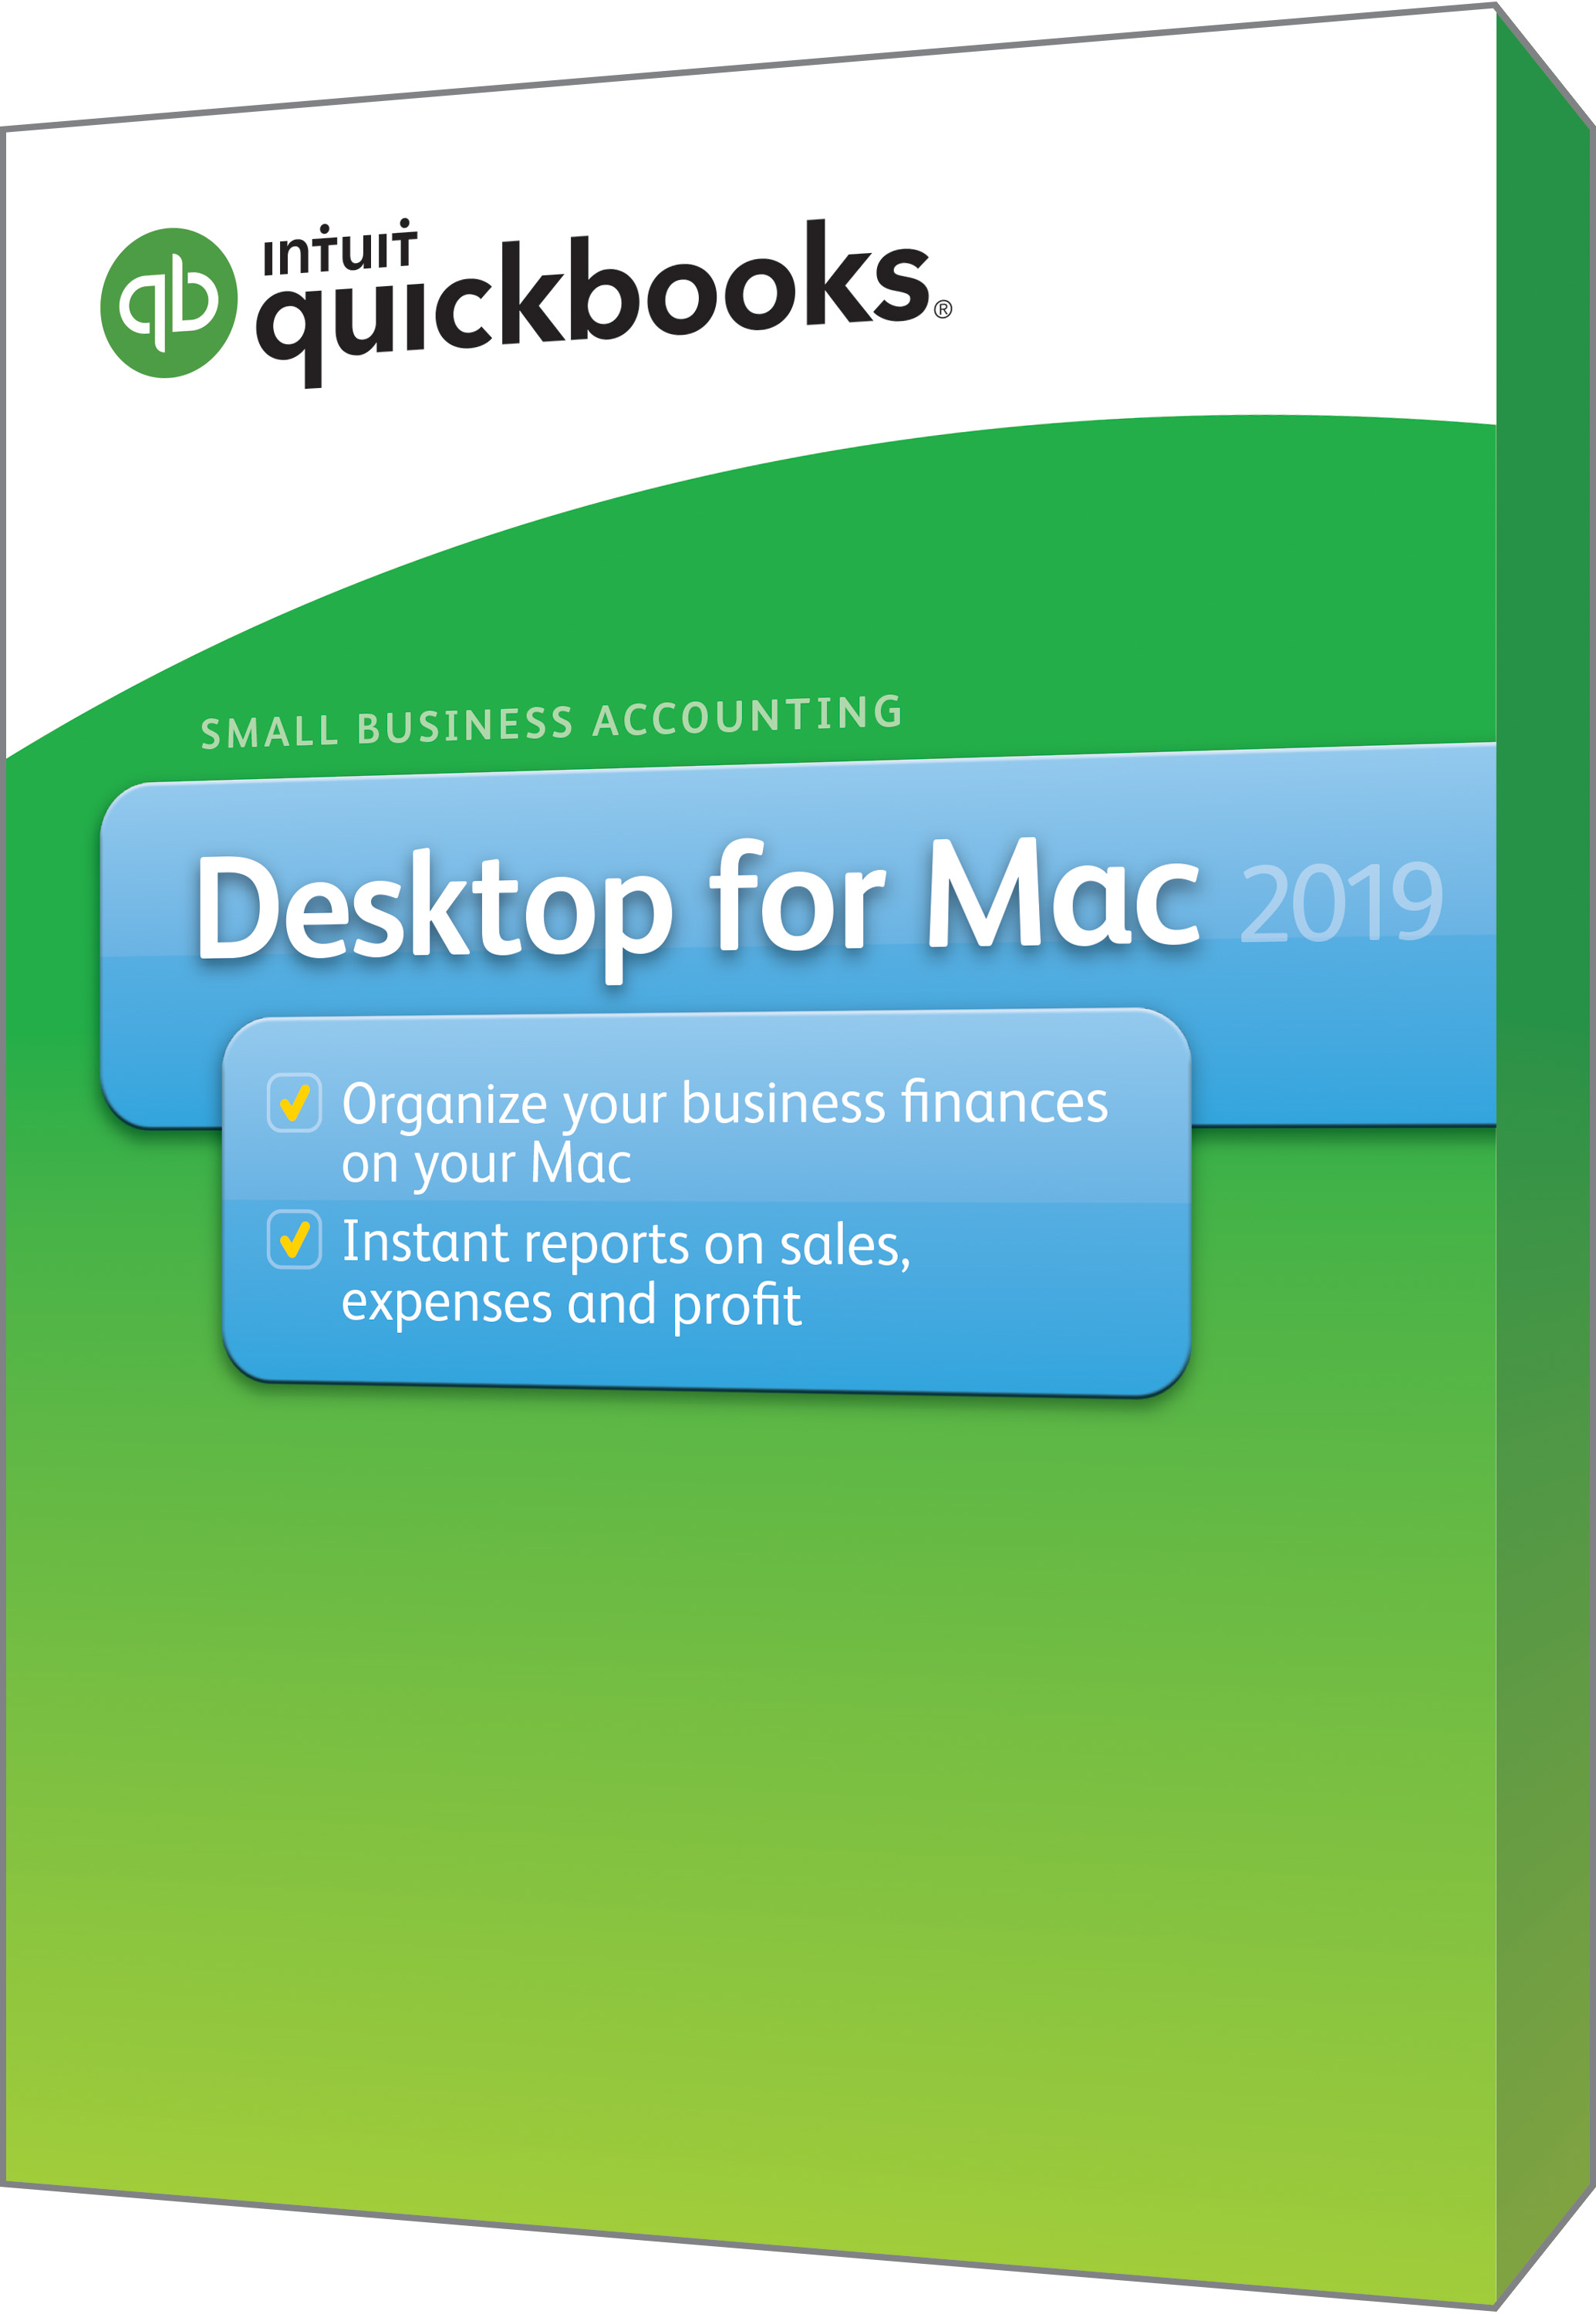 quickbooks for the mac 2015